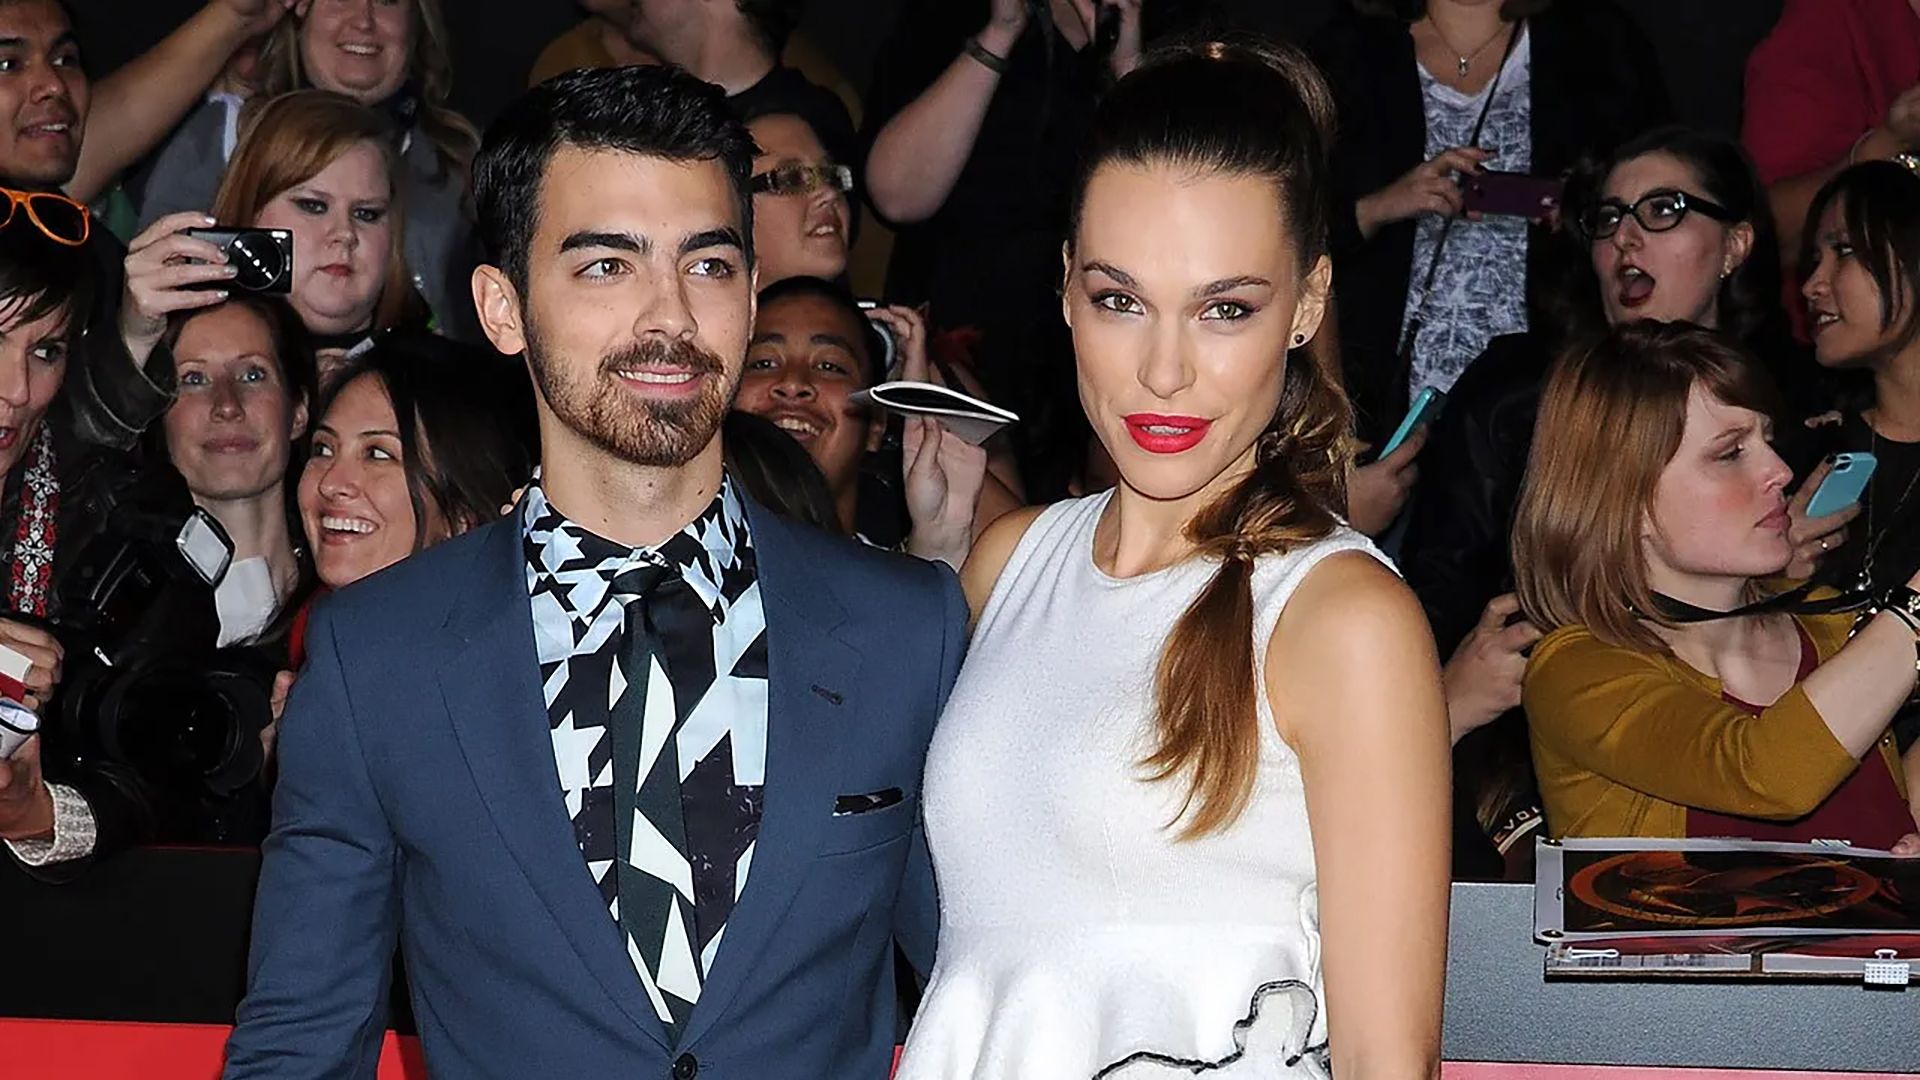 Joe Jonas's ex-girlfriend, Blanda Eggenschwiler, is a designer